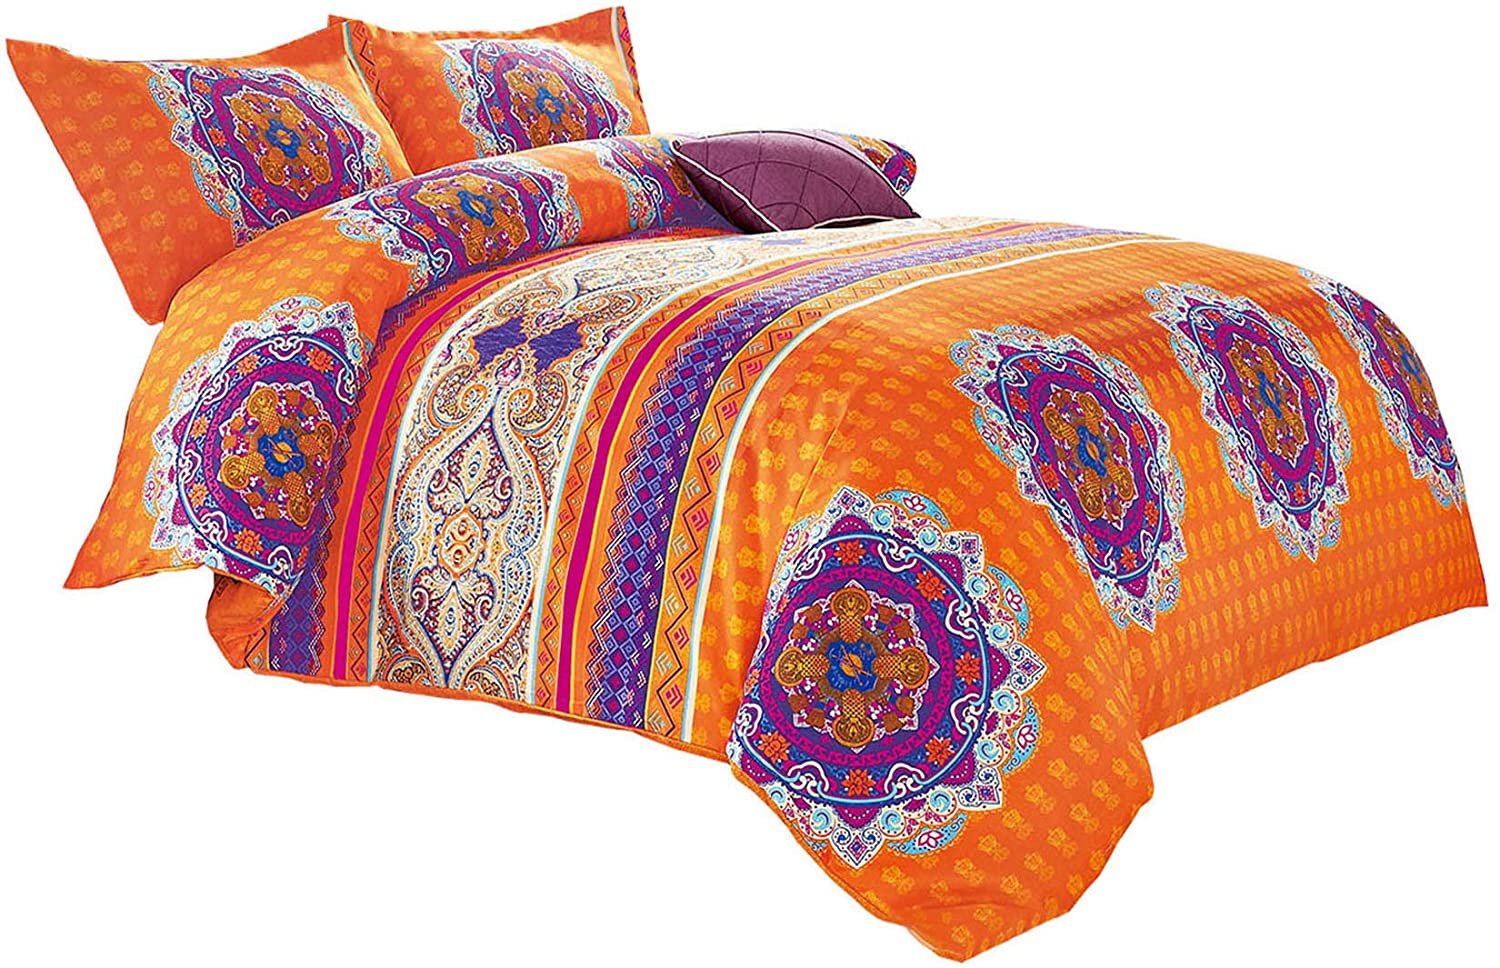 Mandala Comforter Set Details about   Wake In Cloud Orange Bohemian Boho Chic Medallion Patte 